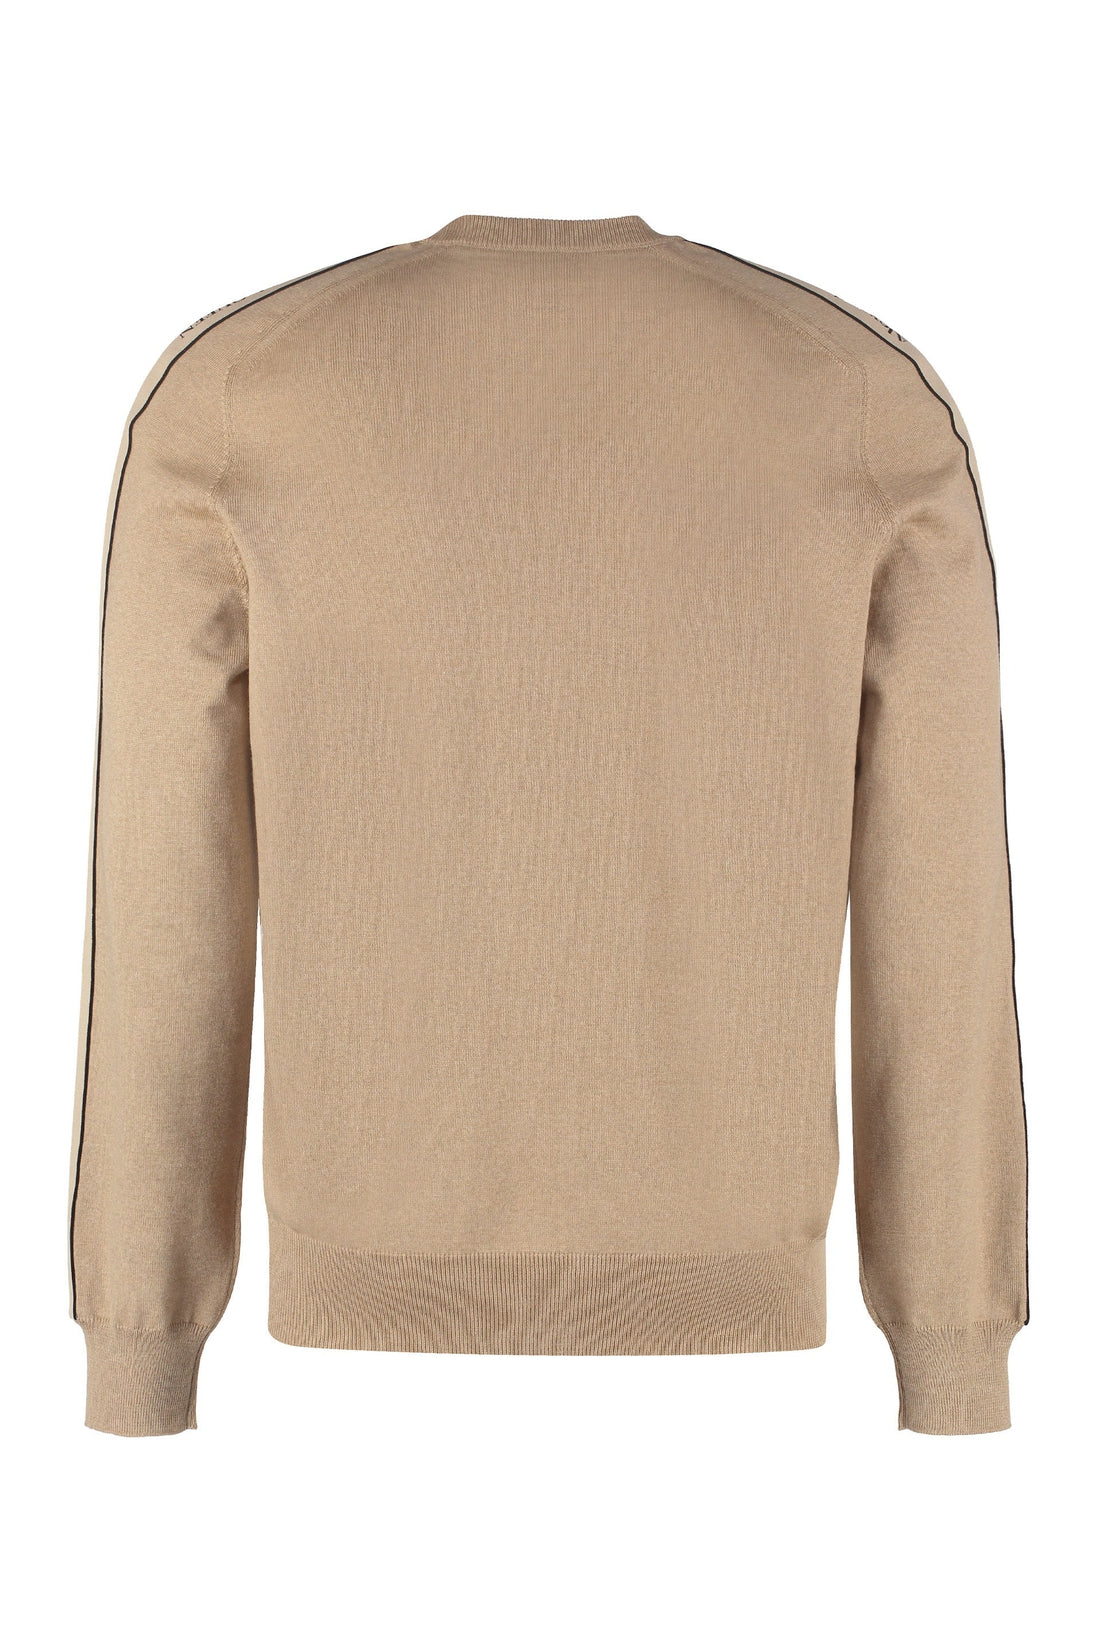 Alexander McQueen-OUTLET-SALE-Crew-neck wool sweater-ARCHIVIST